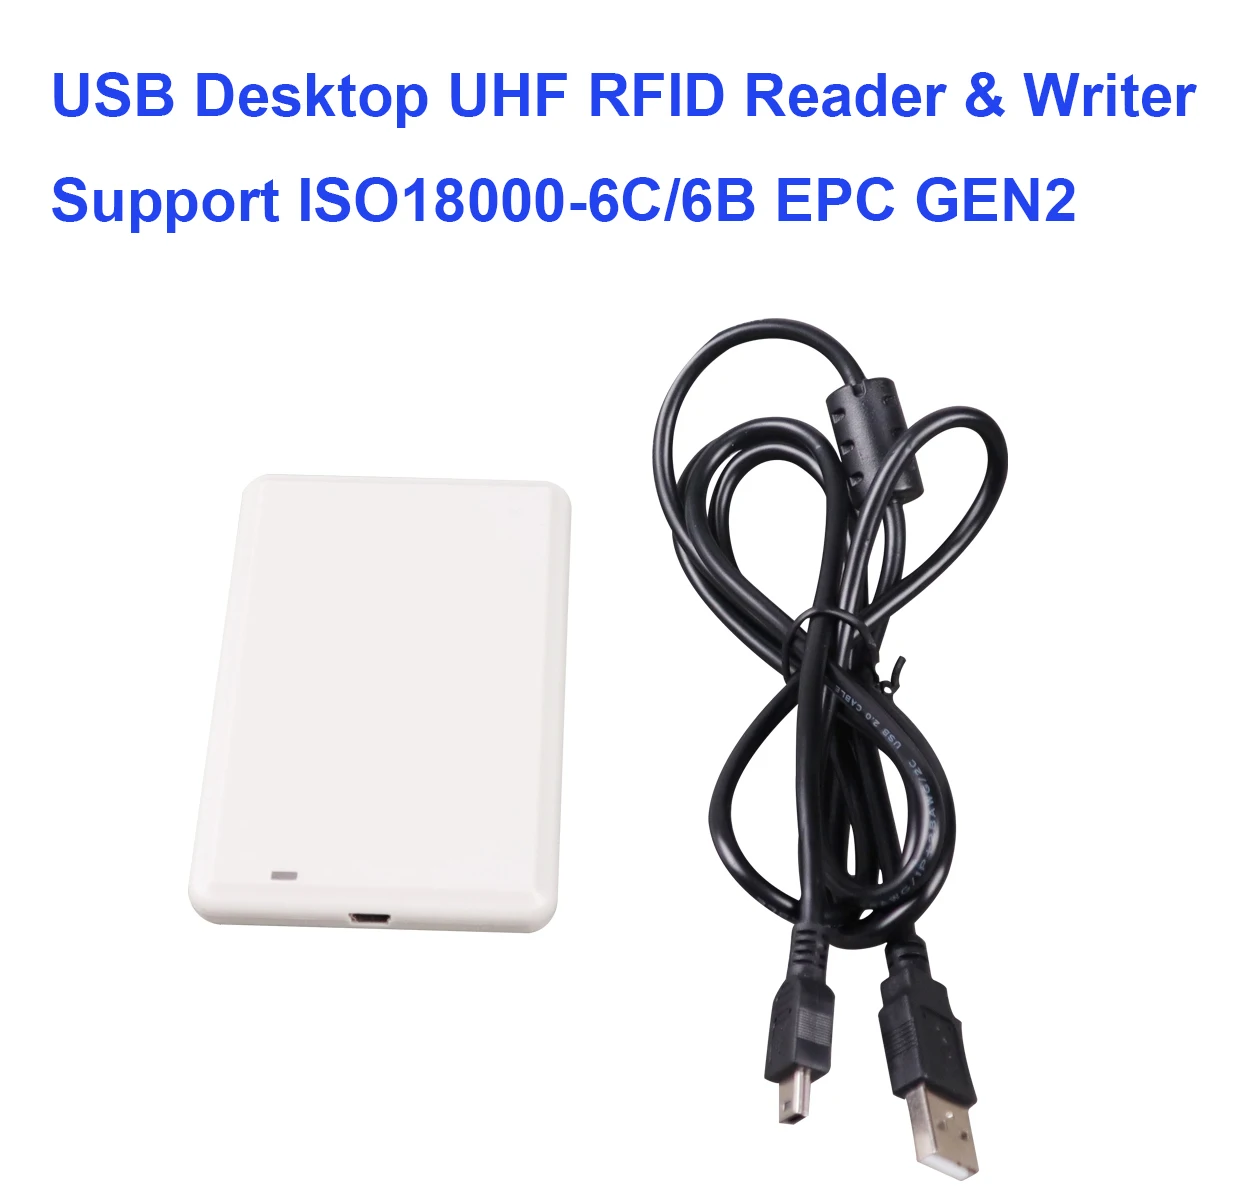 

NJZQ Free Windows 10 PC Program 865-868Mhz 902-928Mhz 900Mhz 915Mhz ISO18000-6C GEN2 USB Desktop RFID Reader